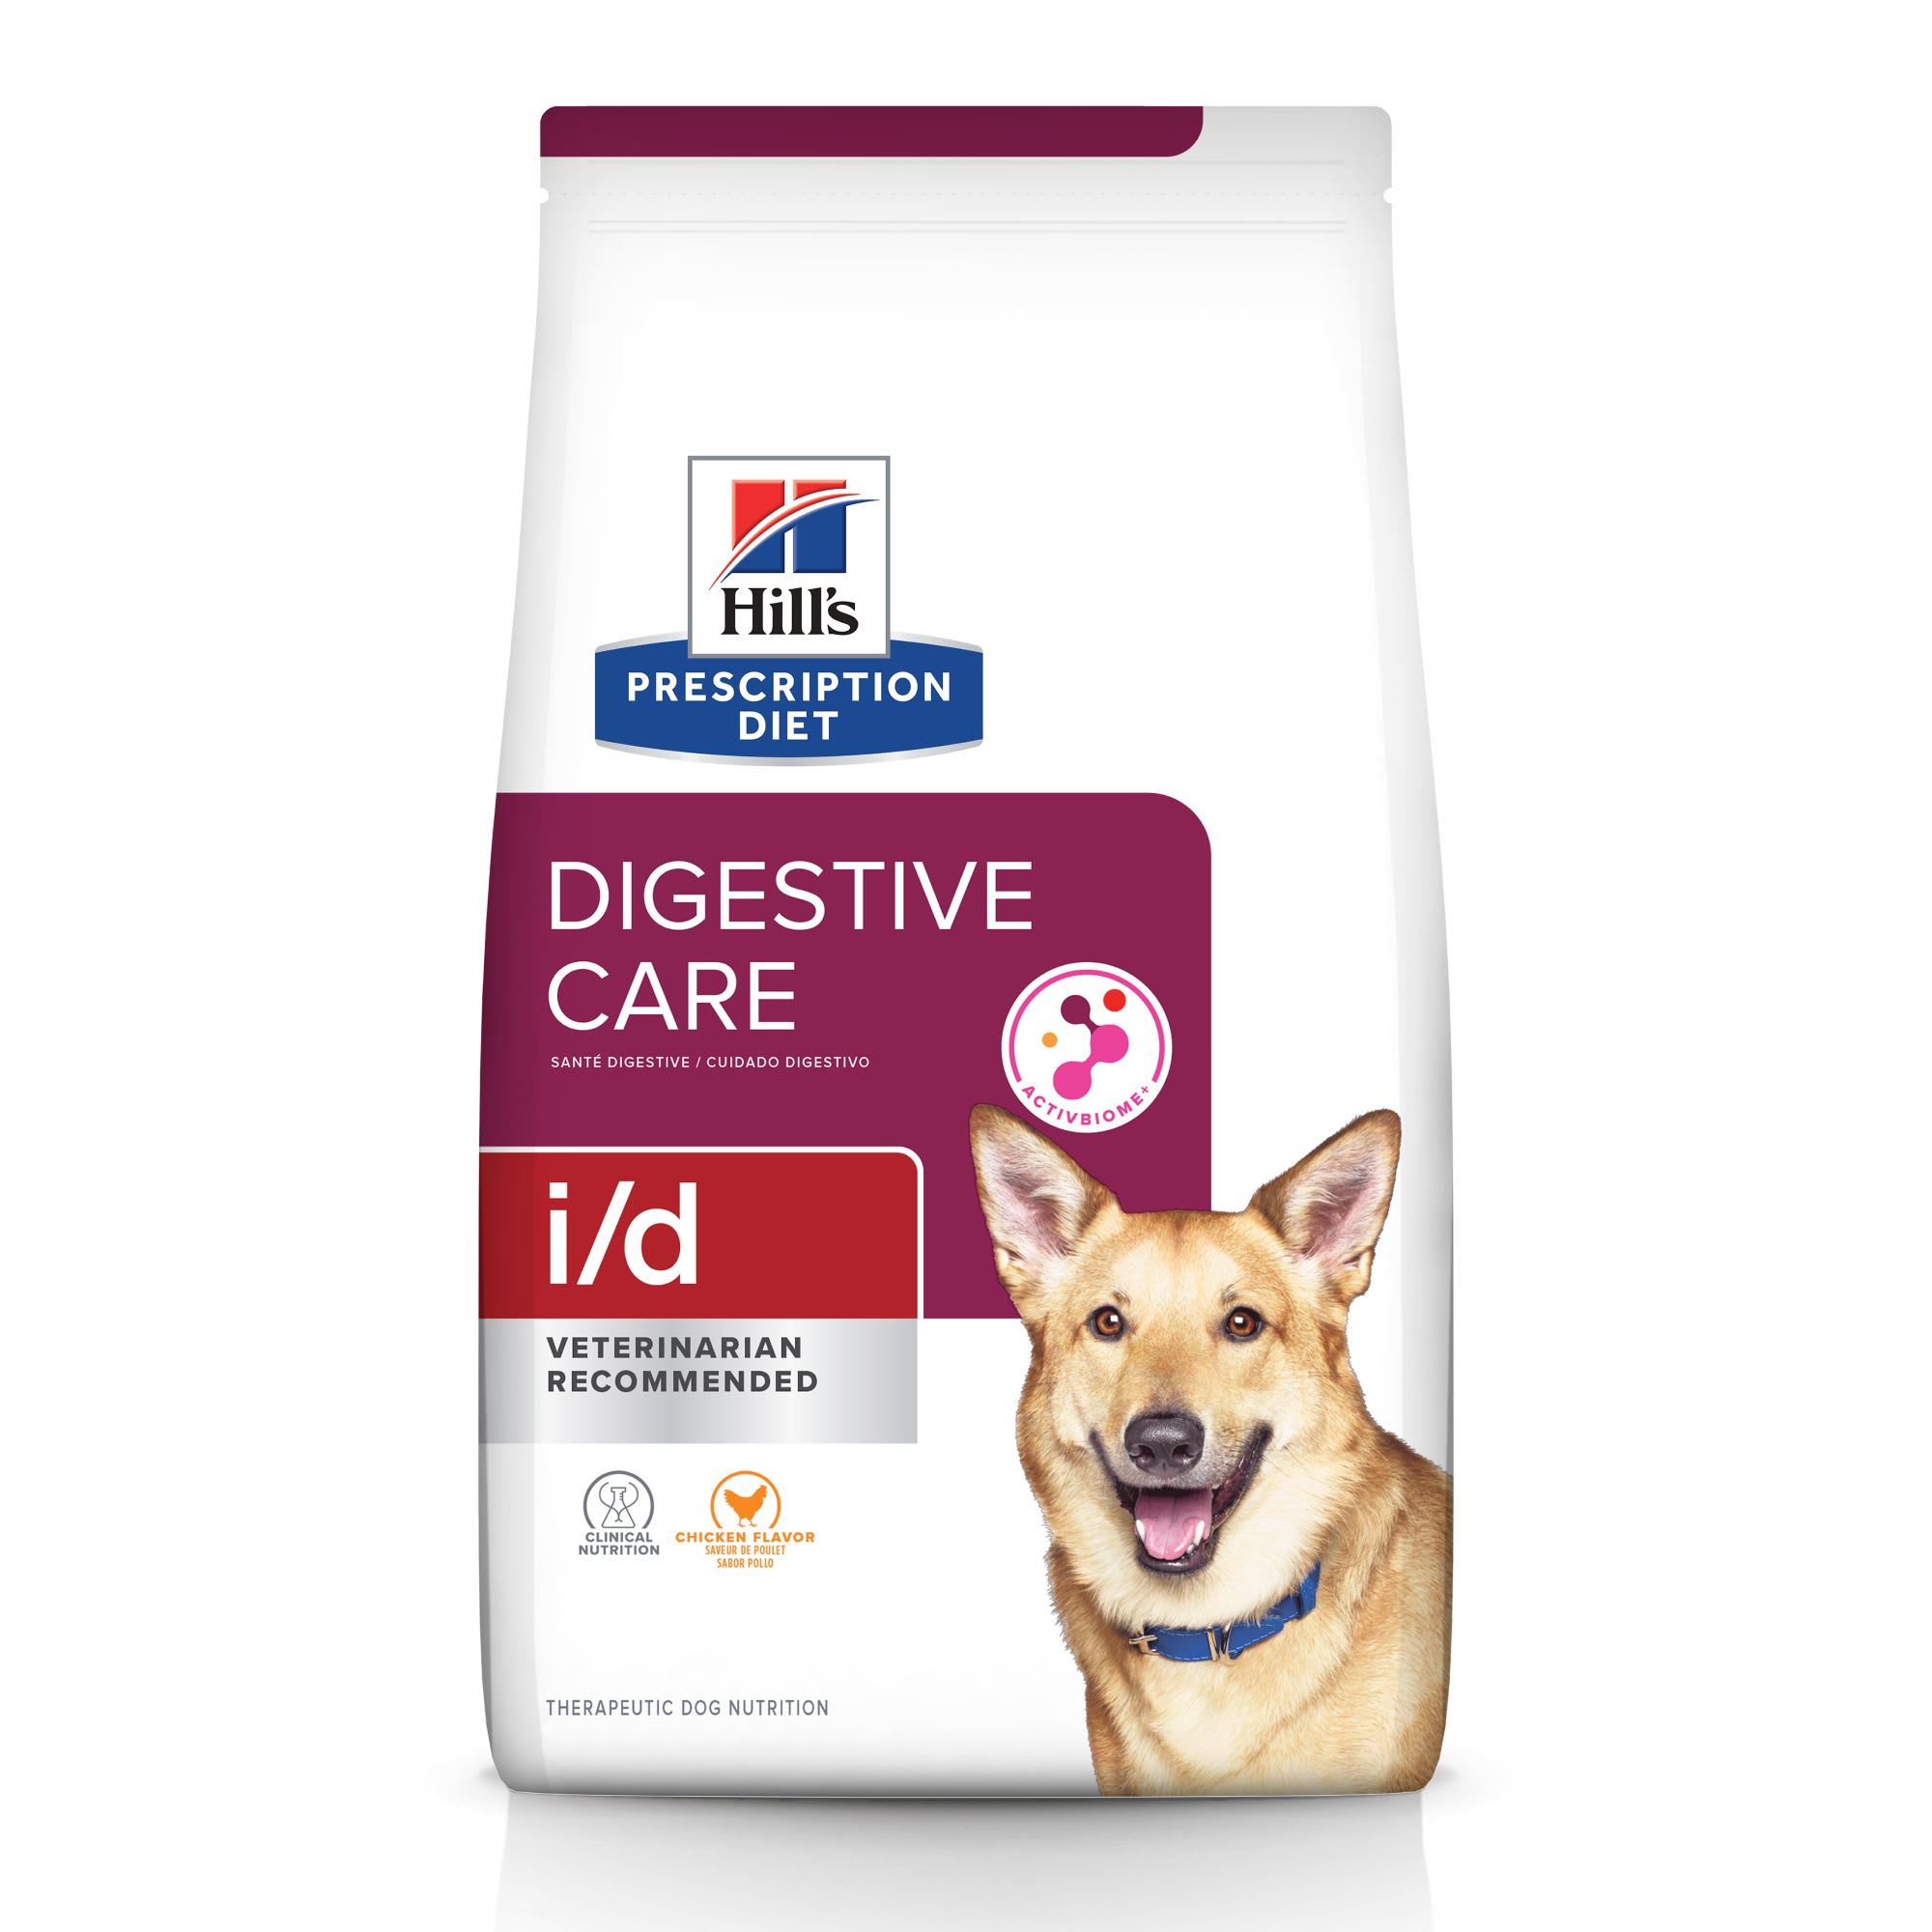 hill's science diet prescription dog food